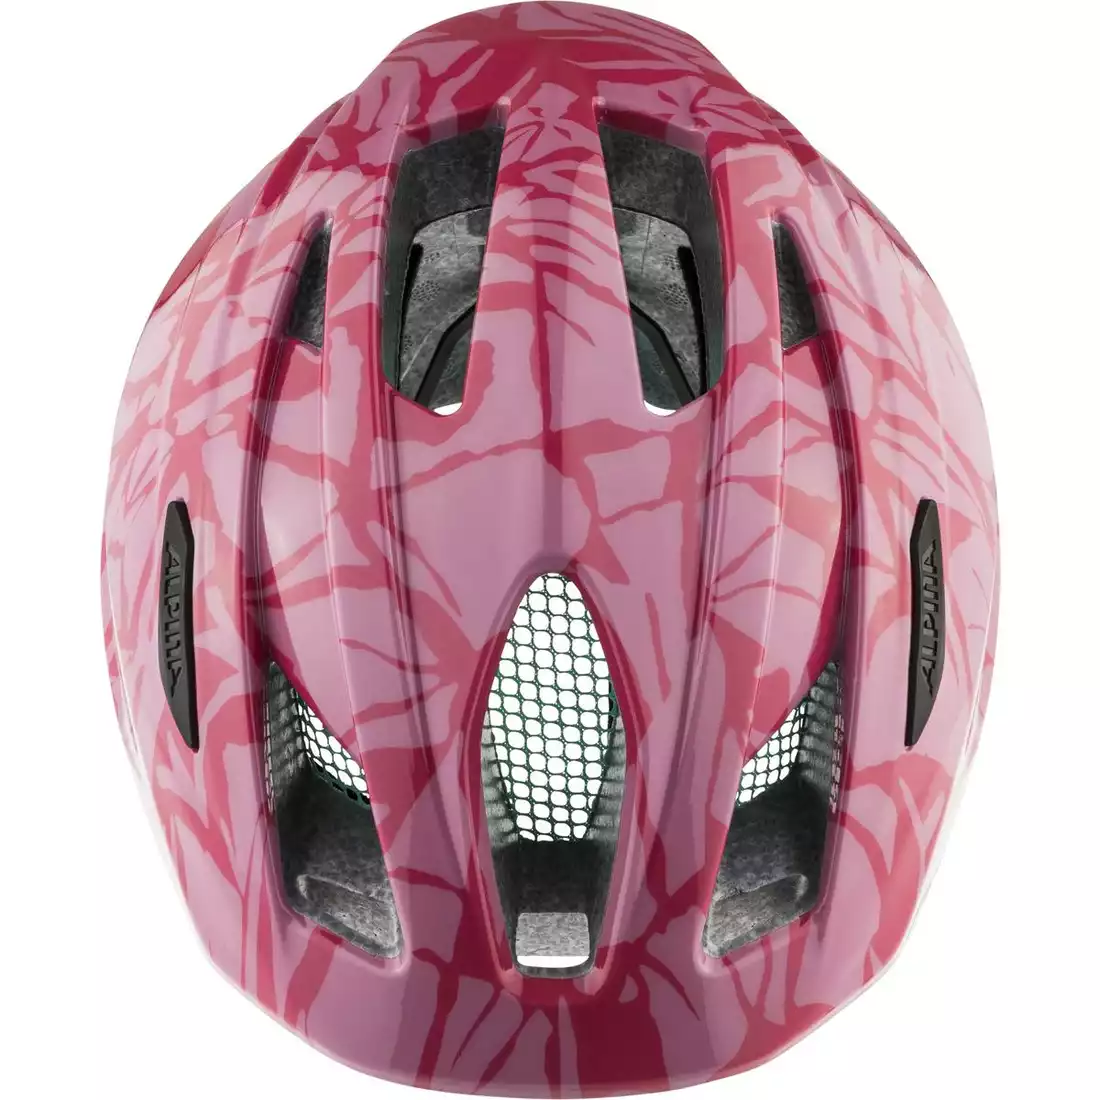 ALPINA PICO Children's bicycle helmet, pink-sparkel gloss